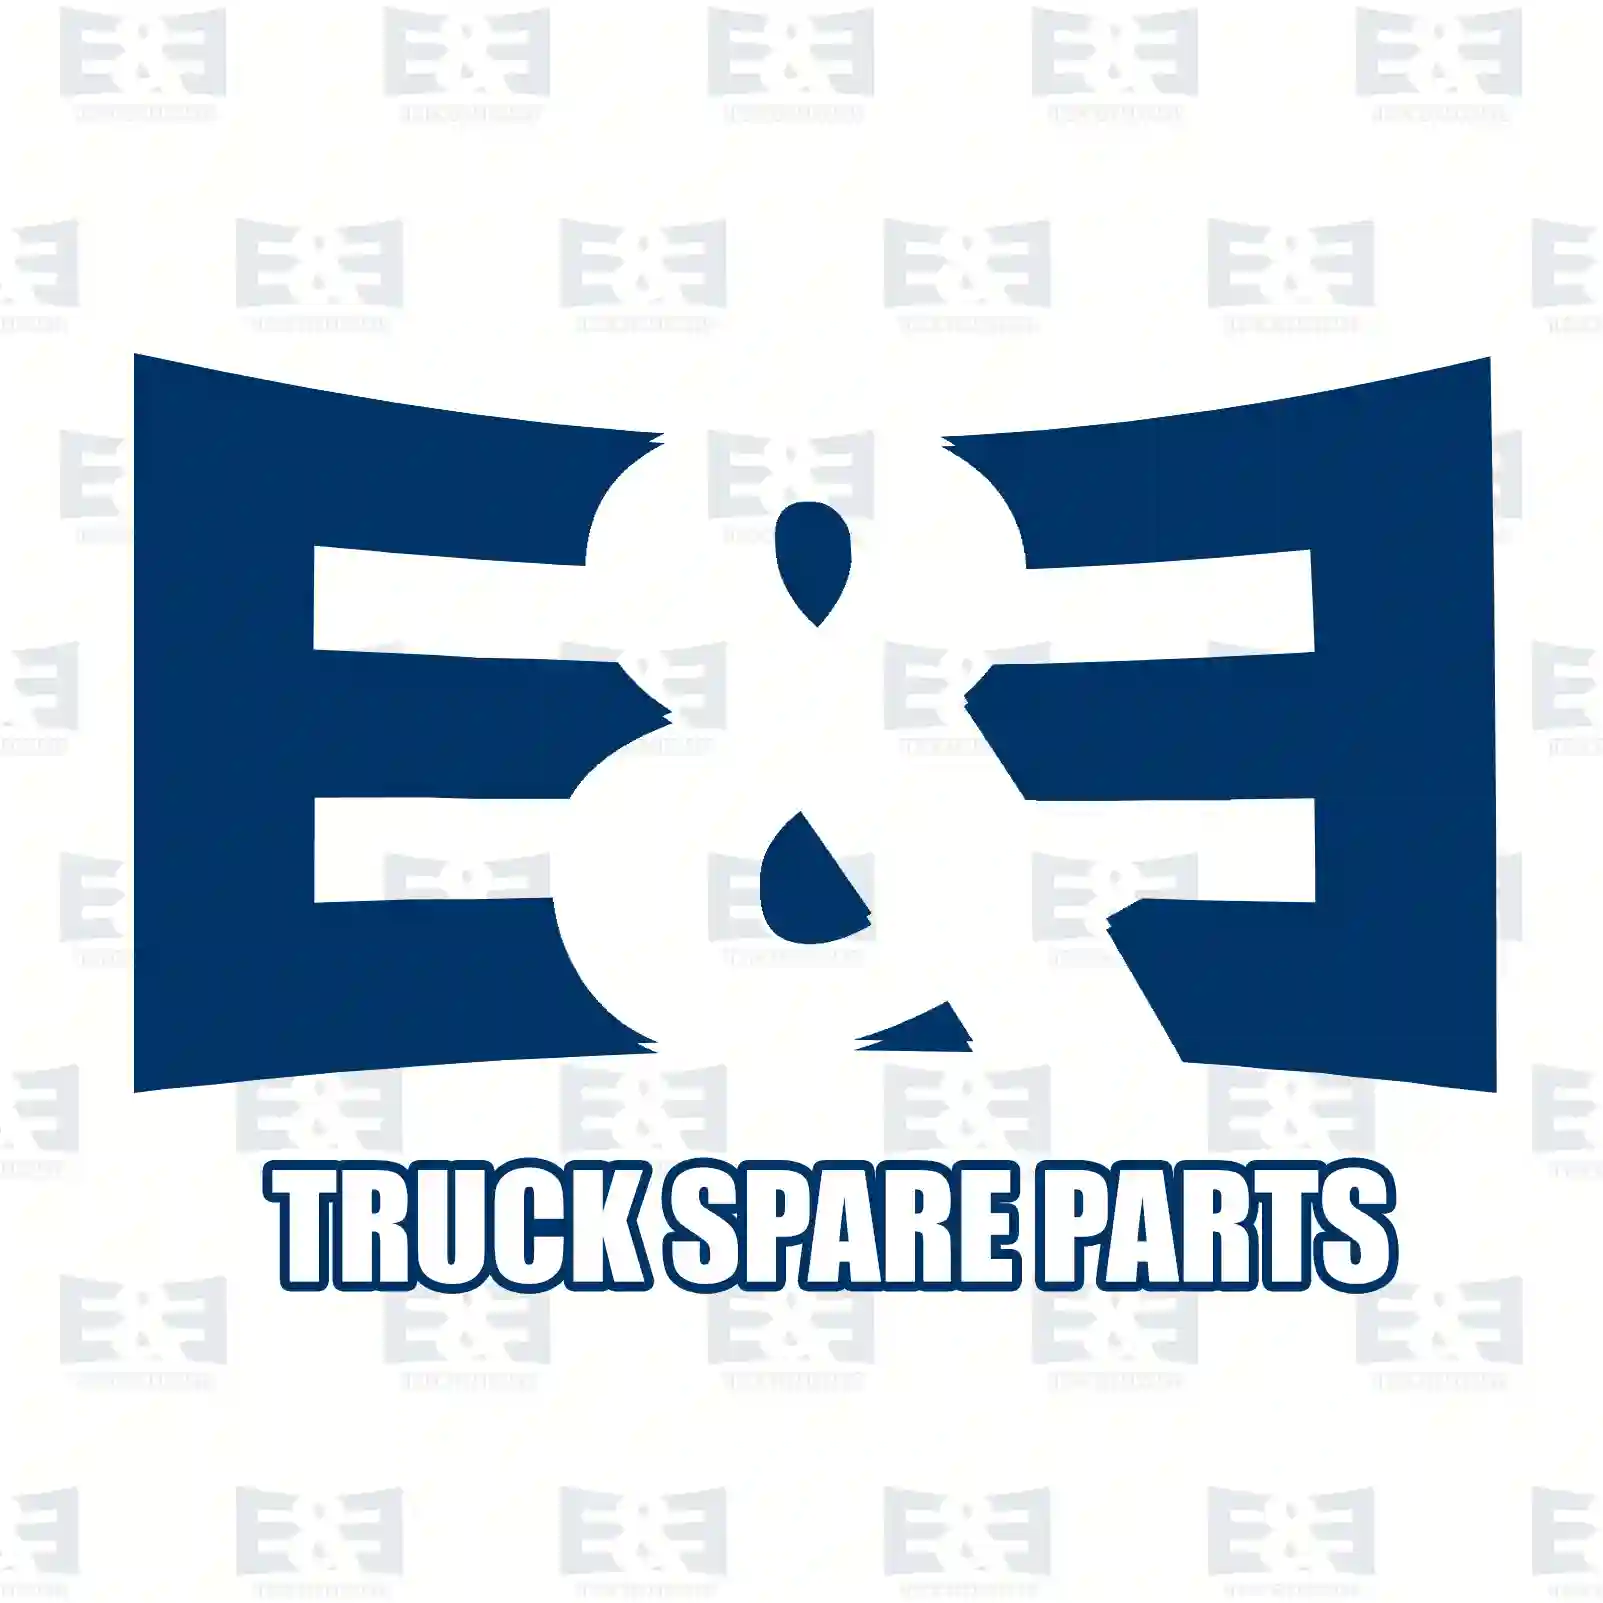 Belt tensioner, 2E2201168, 1127103, 1306666, 1371224, 1S7Q-6A228-AC, 1S7Q-6A228-AD, 1S7Q-6A228-AE, 30731938 ||  2E2201168 E&E Truck Spare Parts | Truck Spare Parts, Auotomotive Spare Parts Belt tensioner, 2E2201168, 1127103, 1306666, 1371224, 1S7Q-6A228-AC, 1S7Q-6A228-AD, 1S7Q-6A228-AE, 30731938 ||  2E2201168 E&E Truck Spare Parts | Truck Spare Parts, Auotomotive Spare Parts